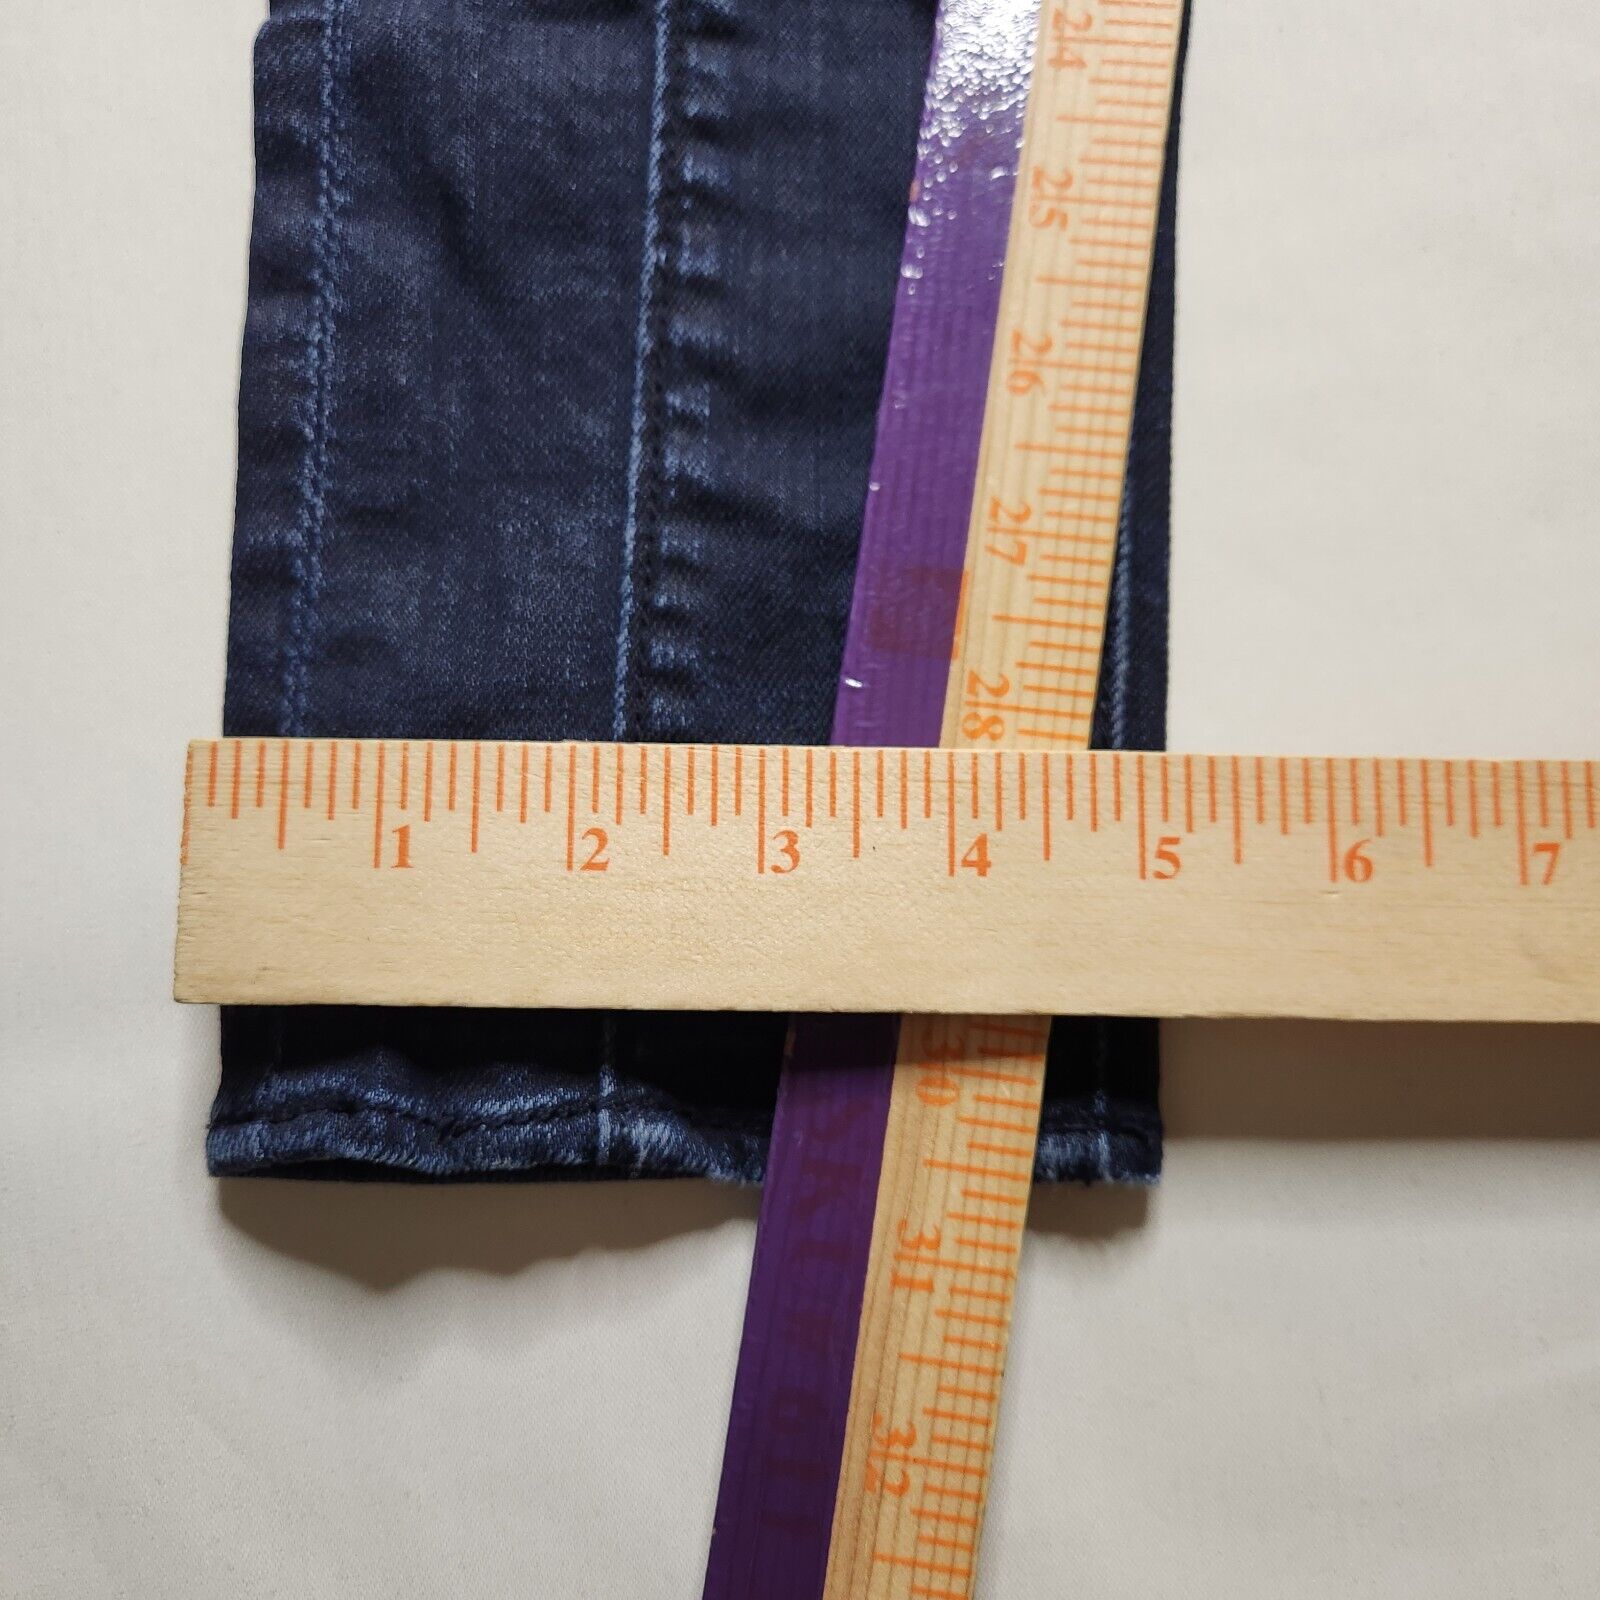 Stich's Black Label Denim Indigo Jeans Size 25 O7 - image 13